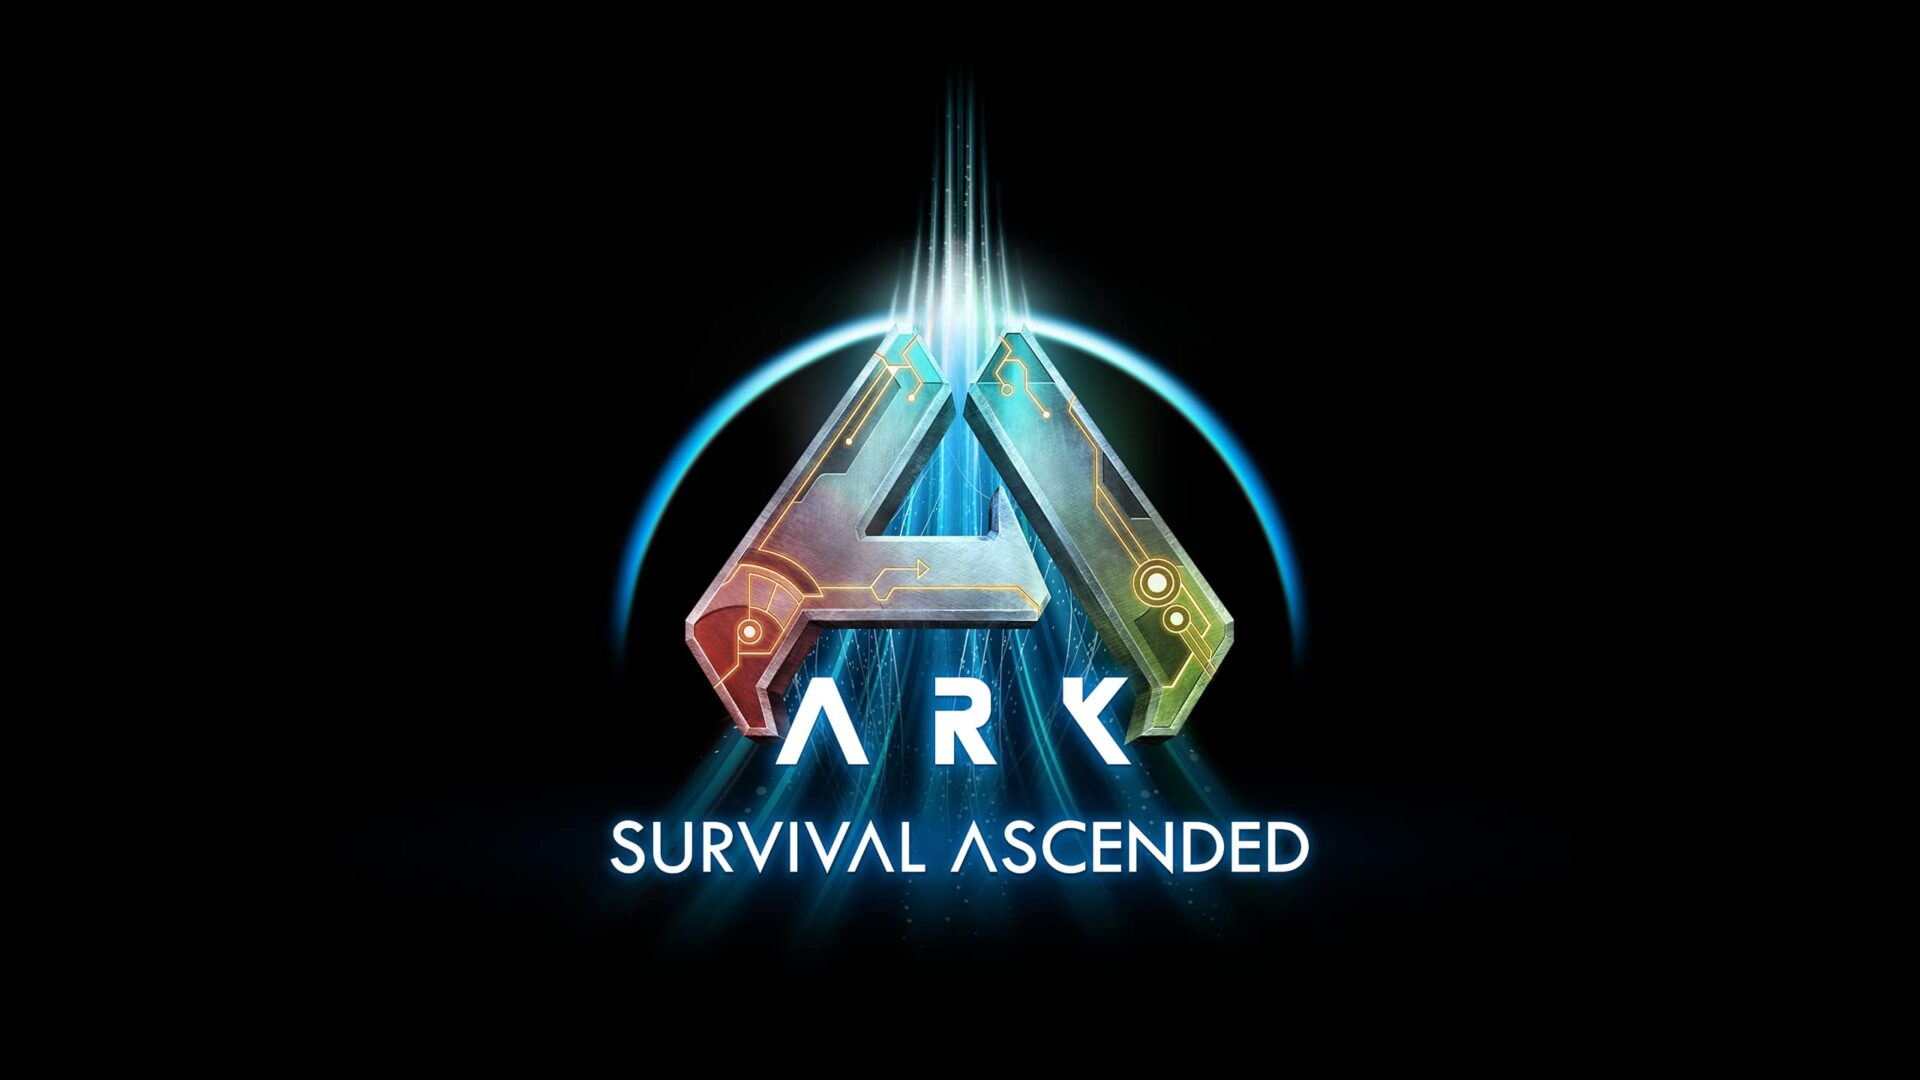 Lengthy Ark 2 release date delay debunked amid fan woes